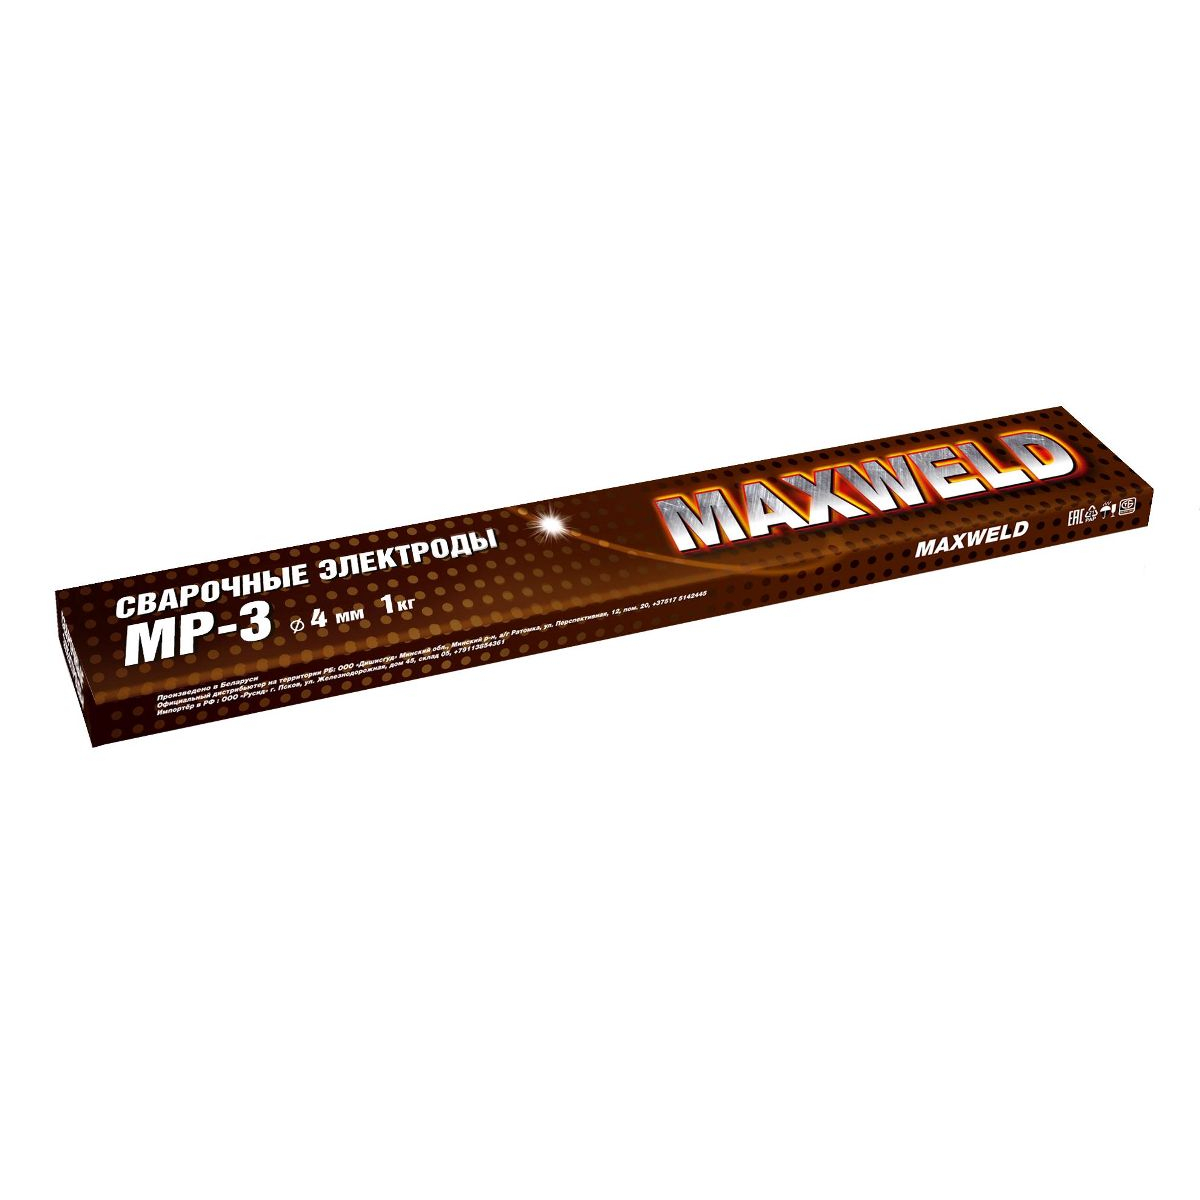 maxweld электроды сталь мр 3 2 5мм 1кг mr251 Электроды Maxweld СТАЛЬ МР-3 4мм, 1 кг